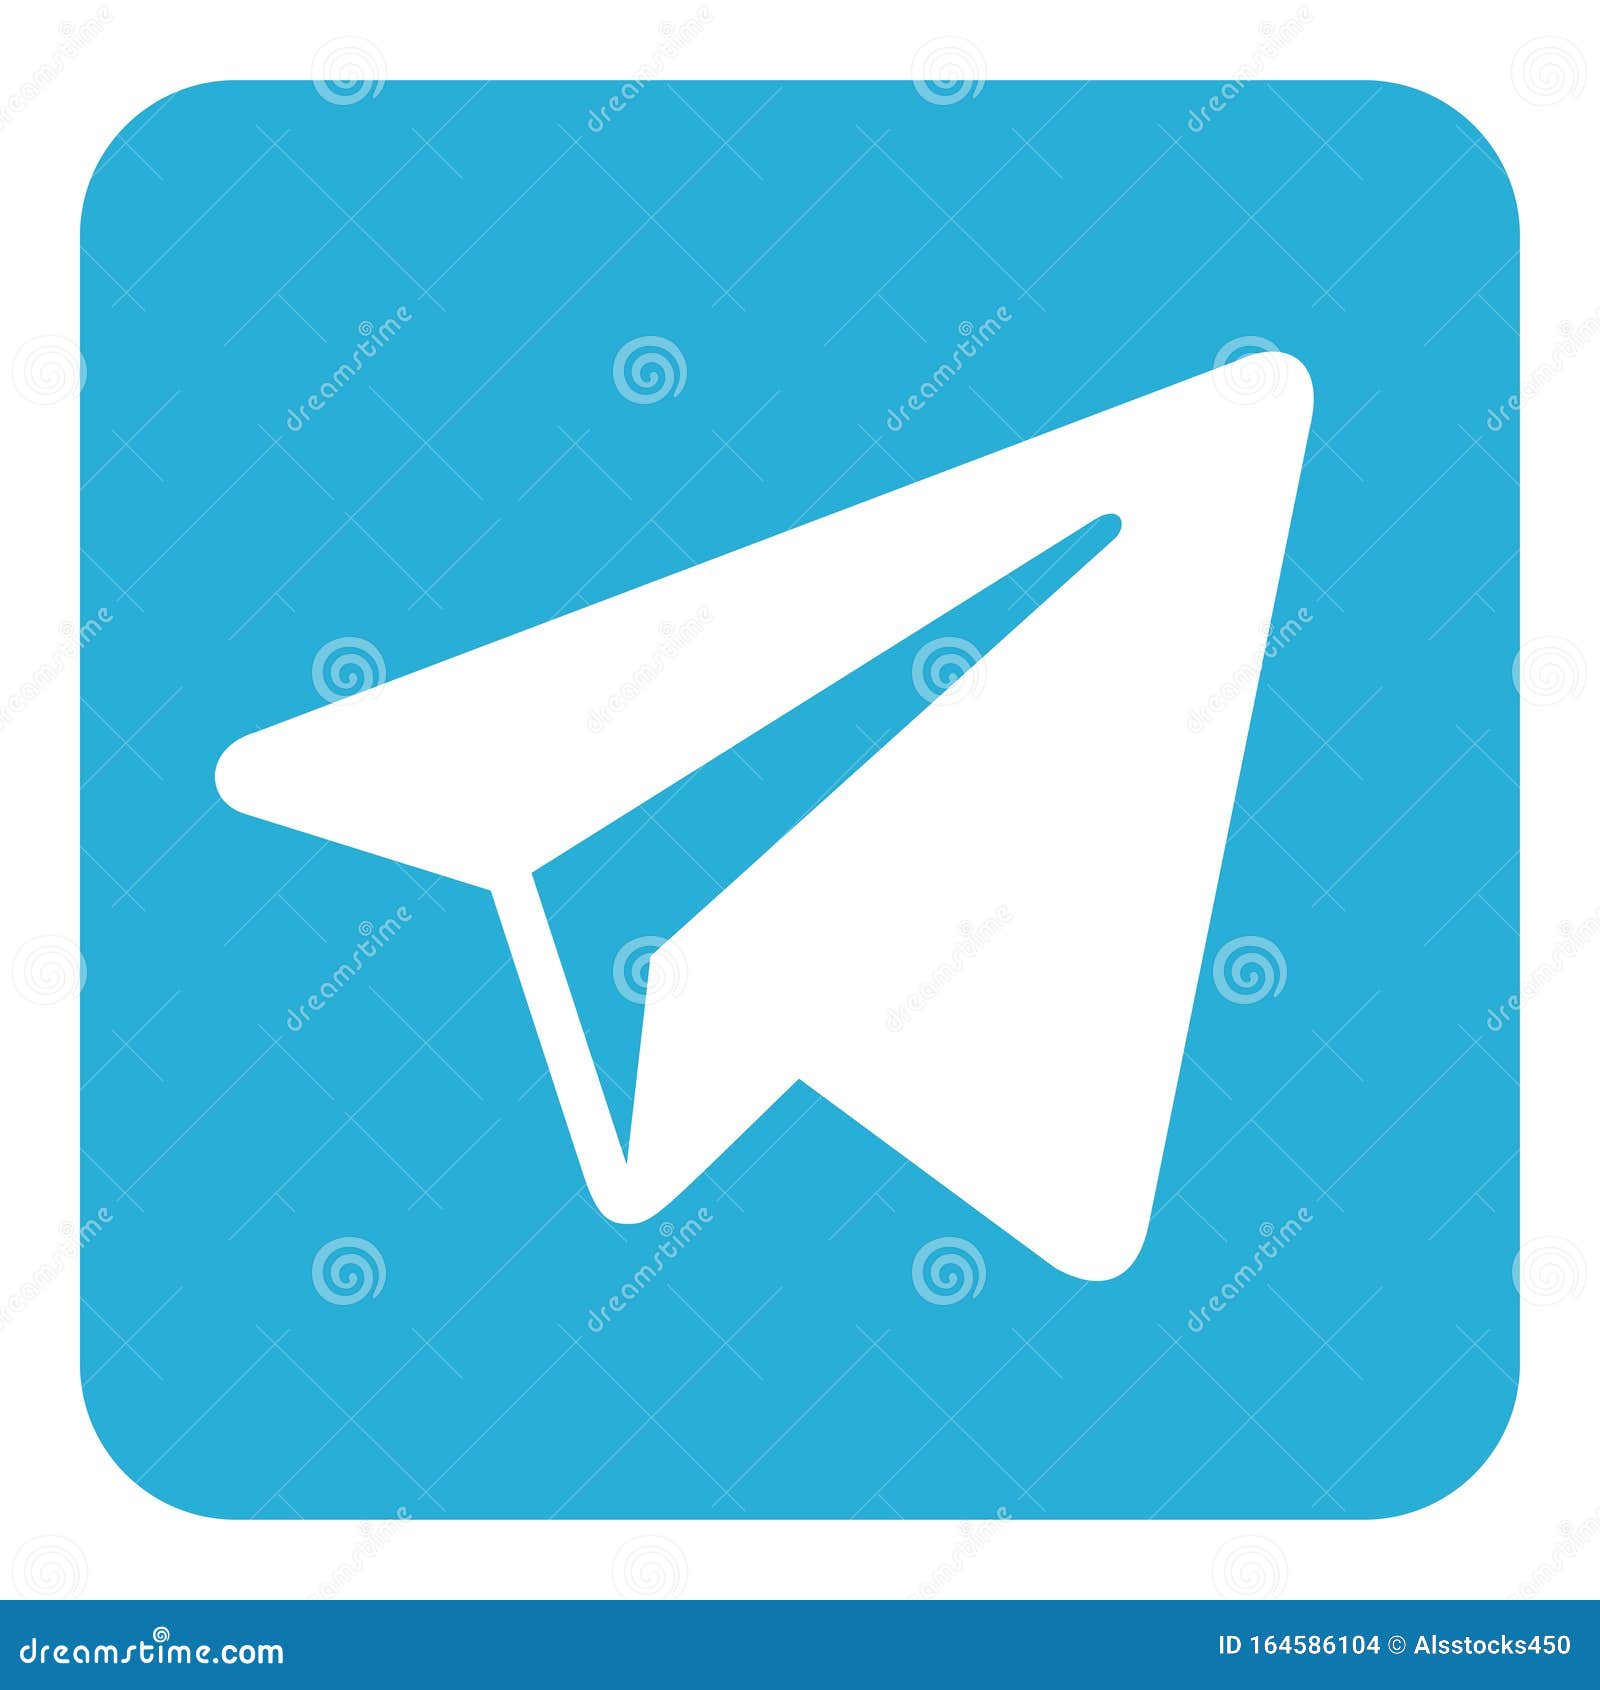 Telegram logo icon editorial stock image. Illustration of button - 164586104